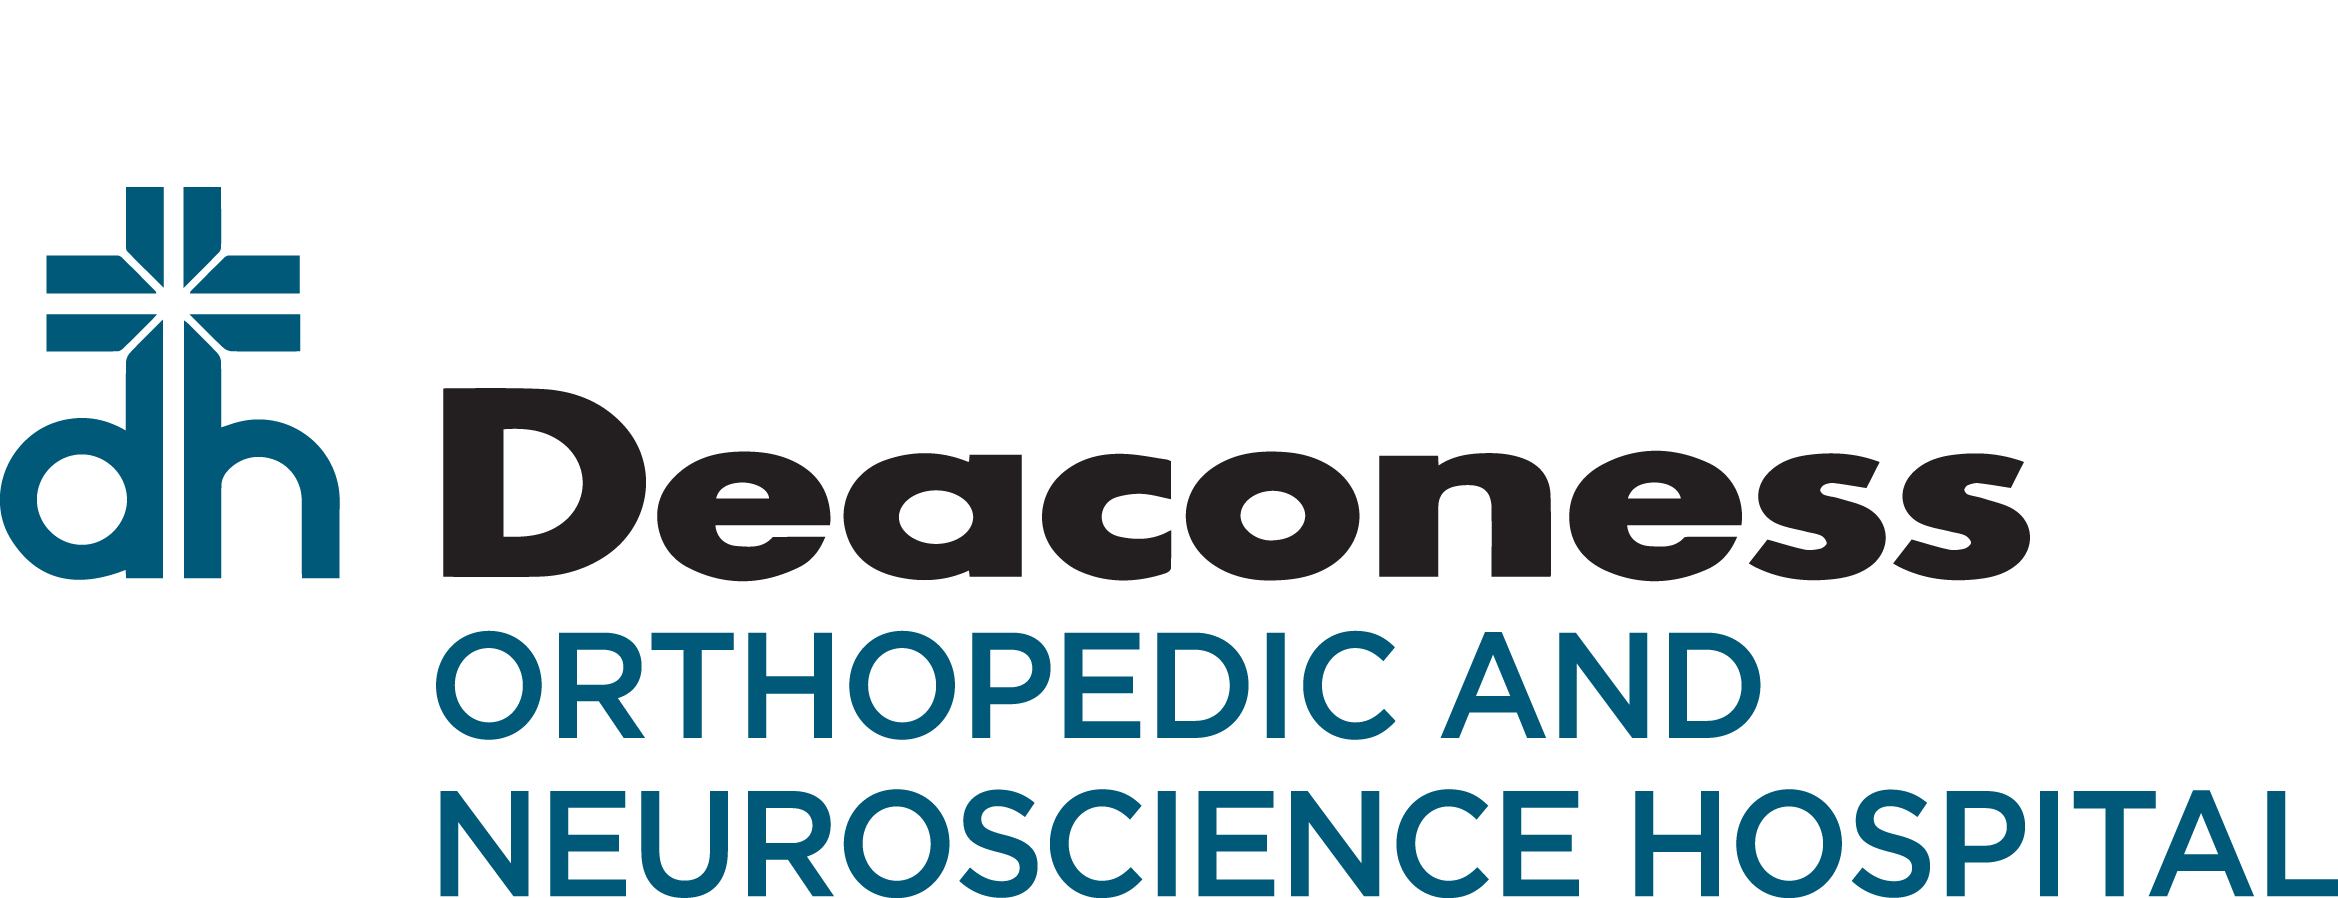 Deaconess Orthopedic and Neuroscience Hospital Hospital